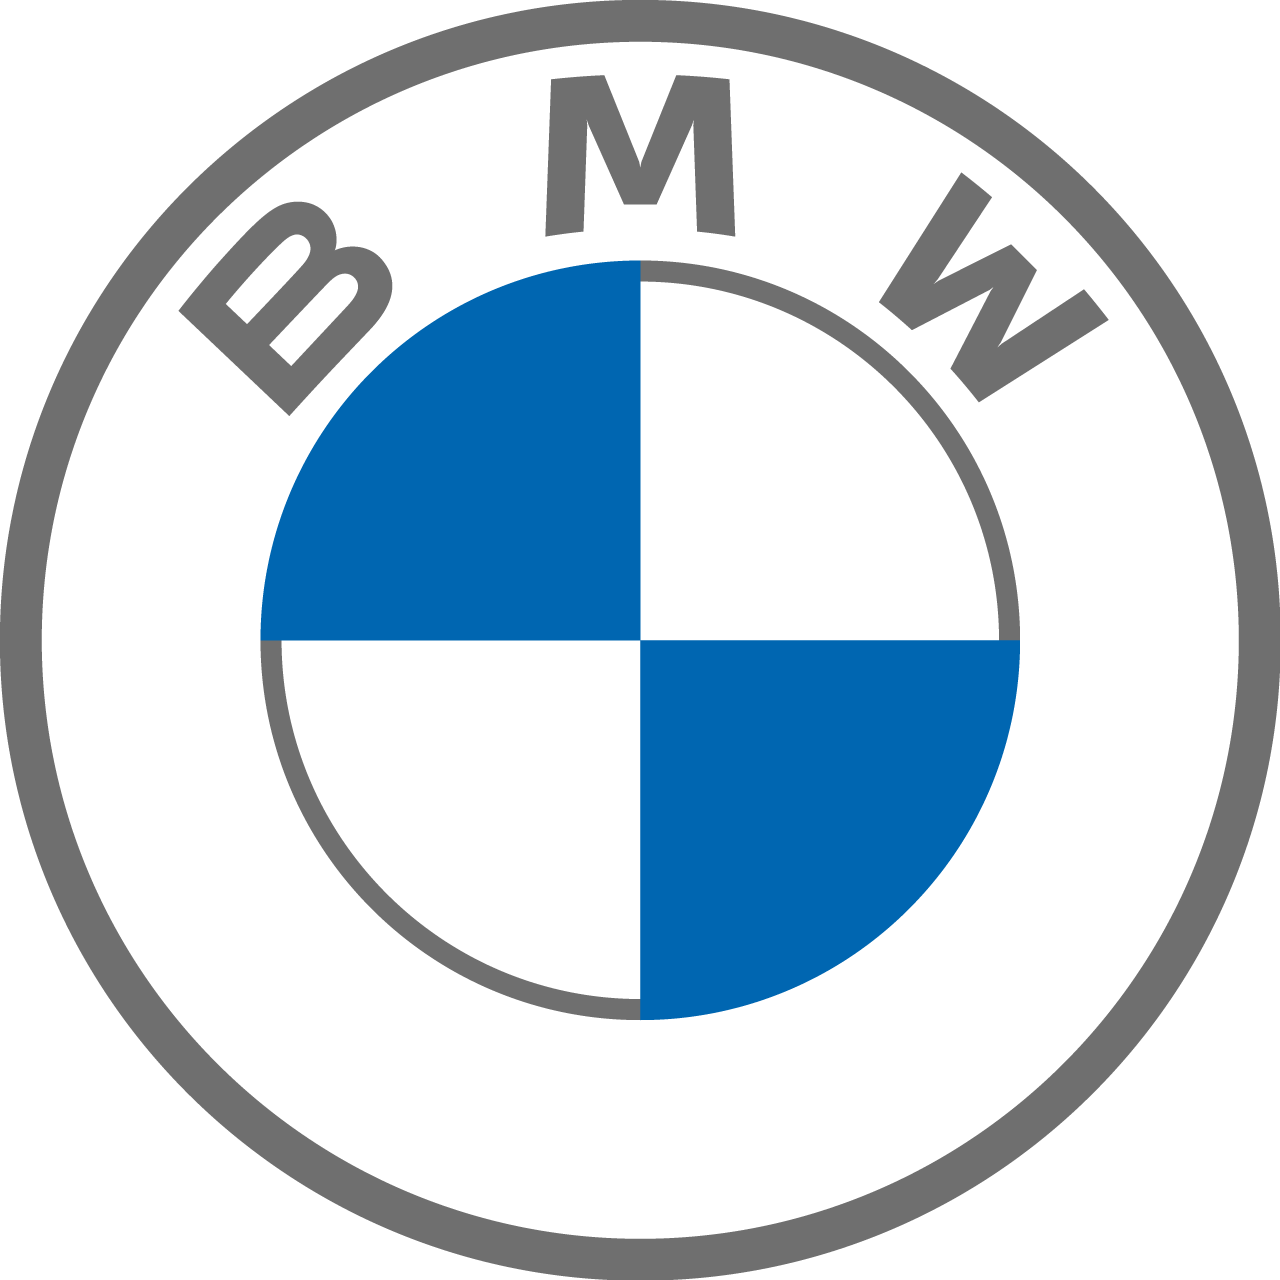 BMW Siège social